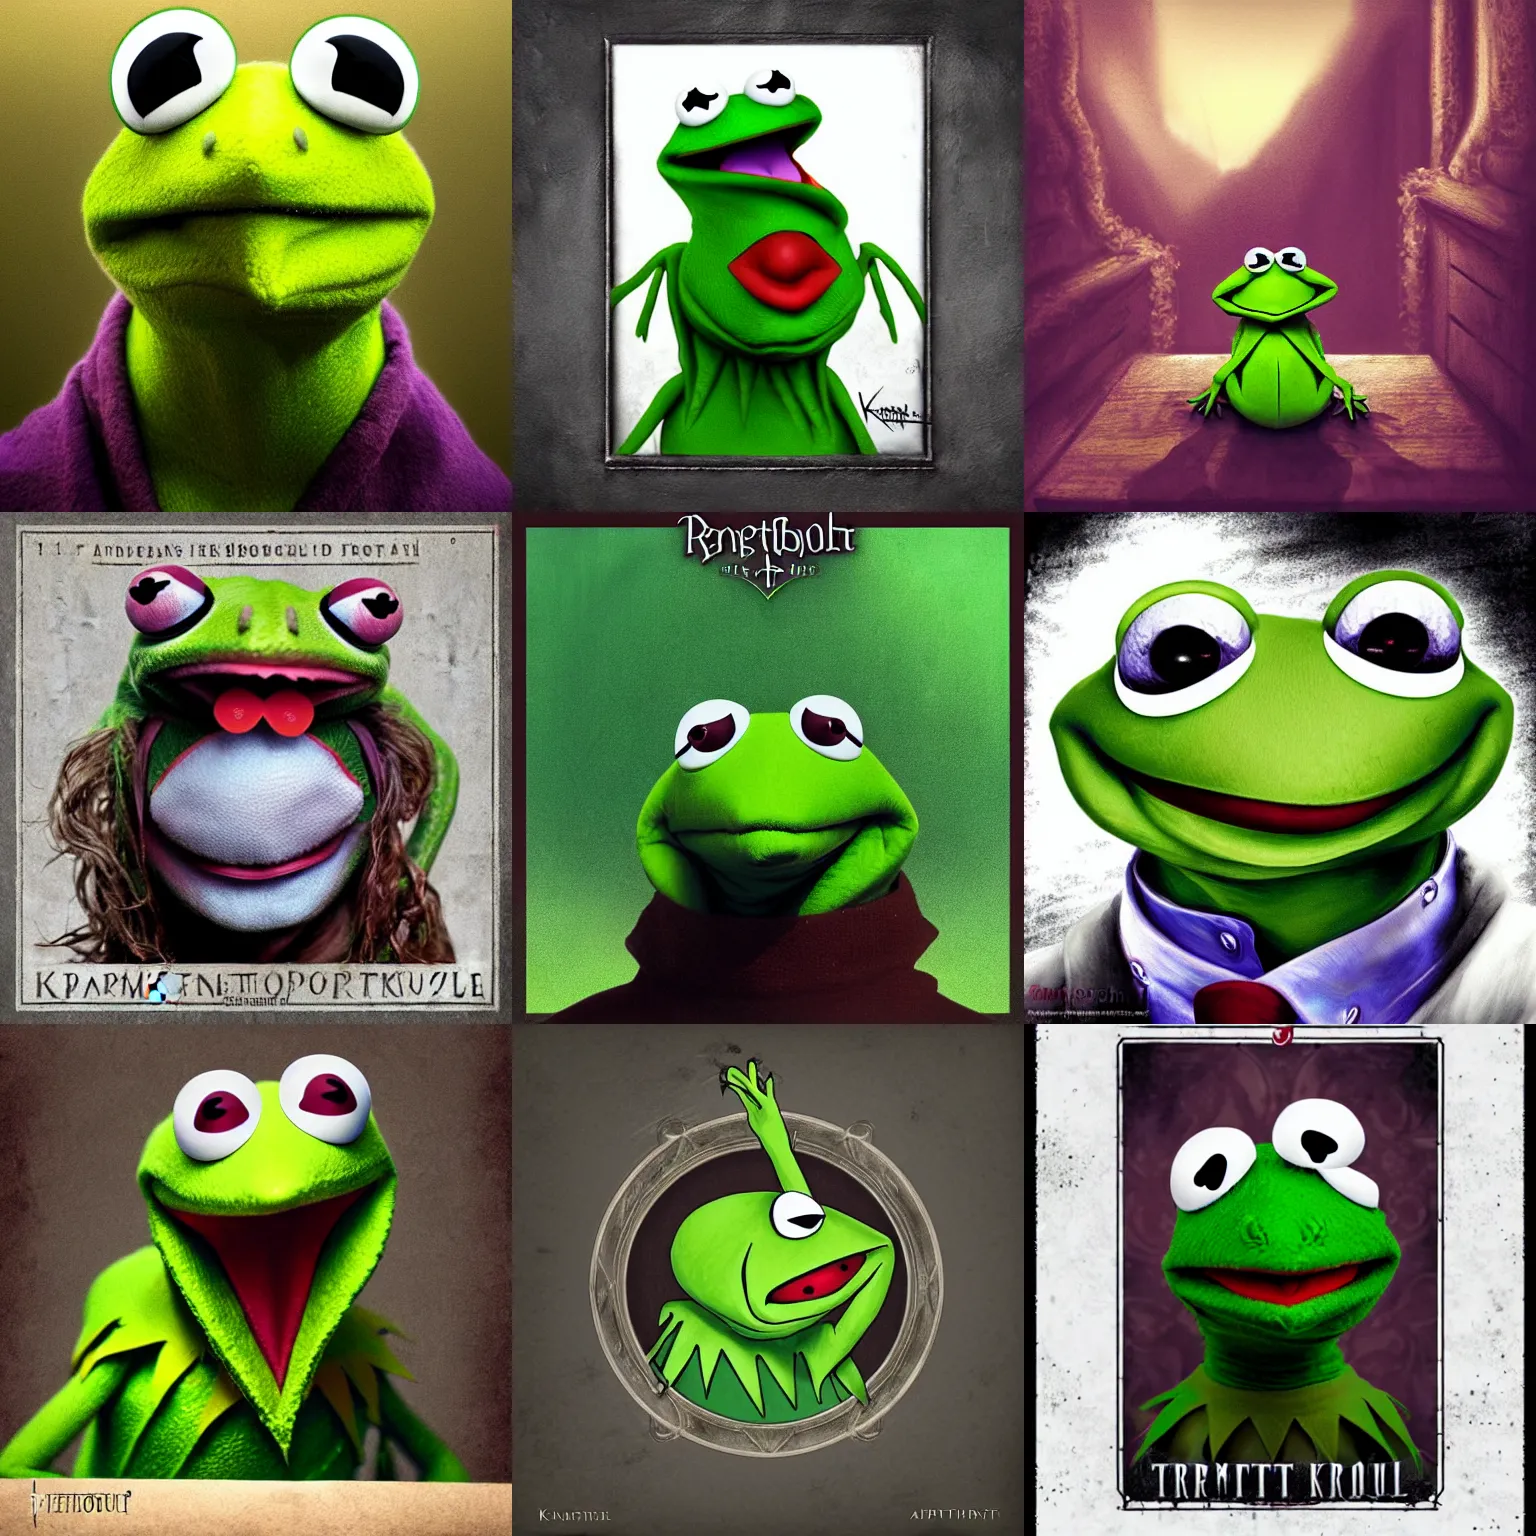 Prompt: portrait of kermit the frog, kamelot album cover, trending on artstation